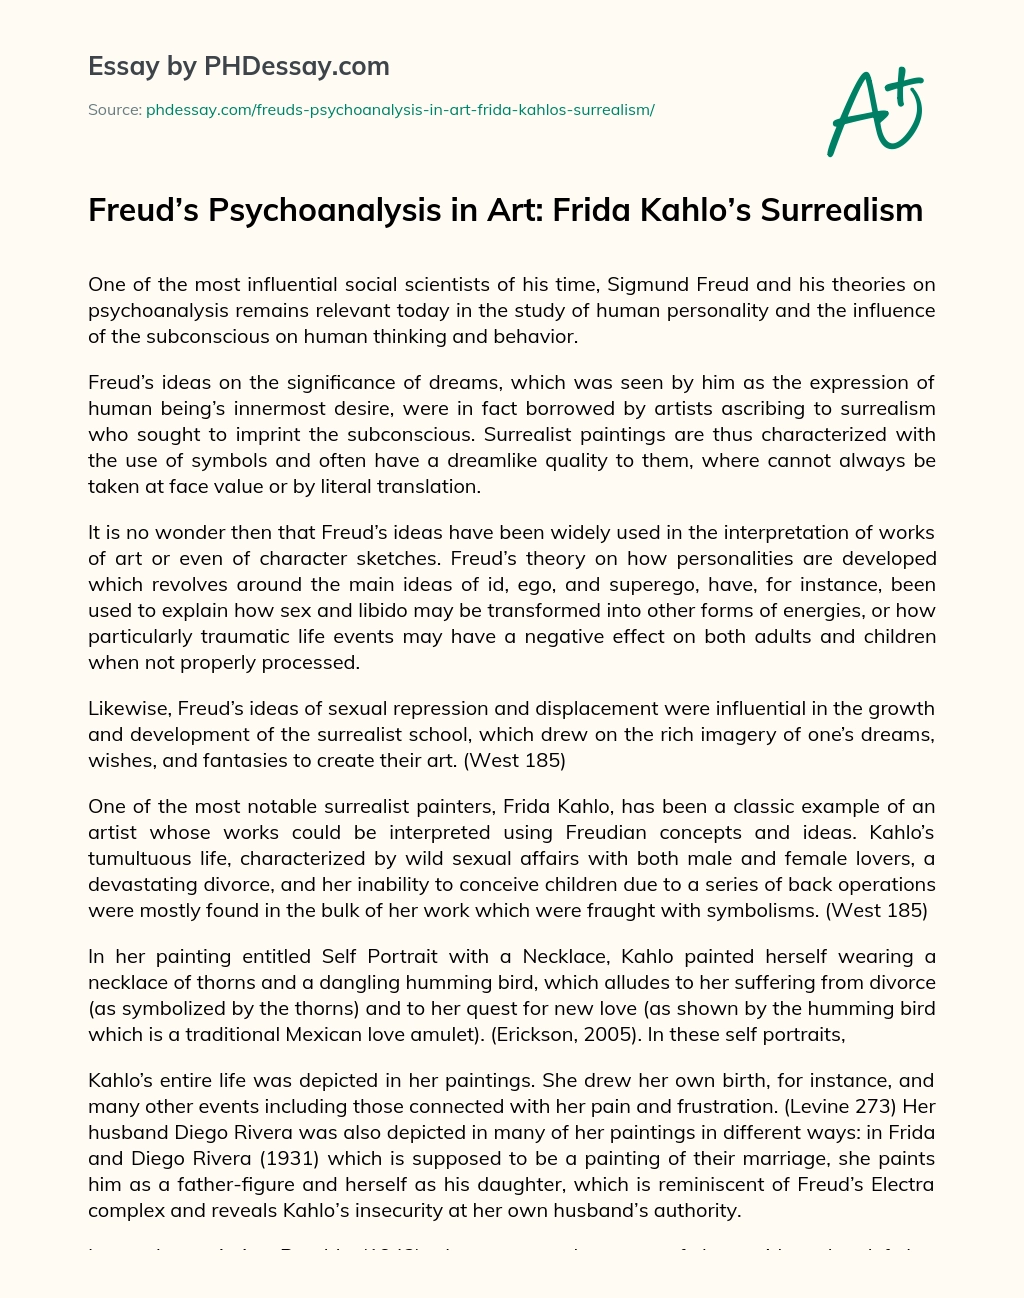 Freud’s Psychoanalysis in Art: Frida Kahlo’s Surrealism essay